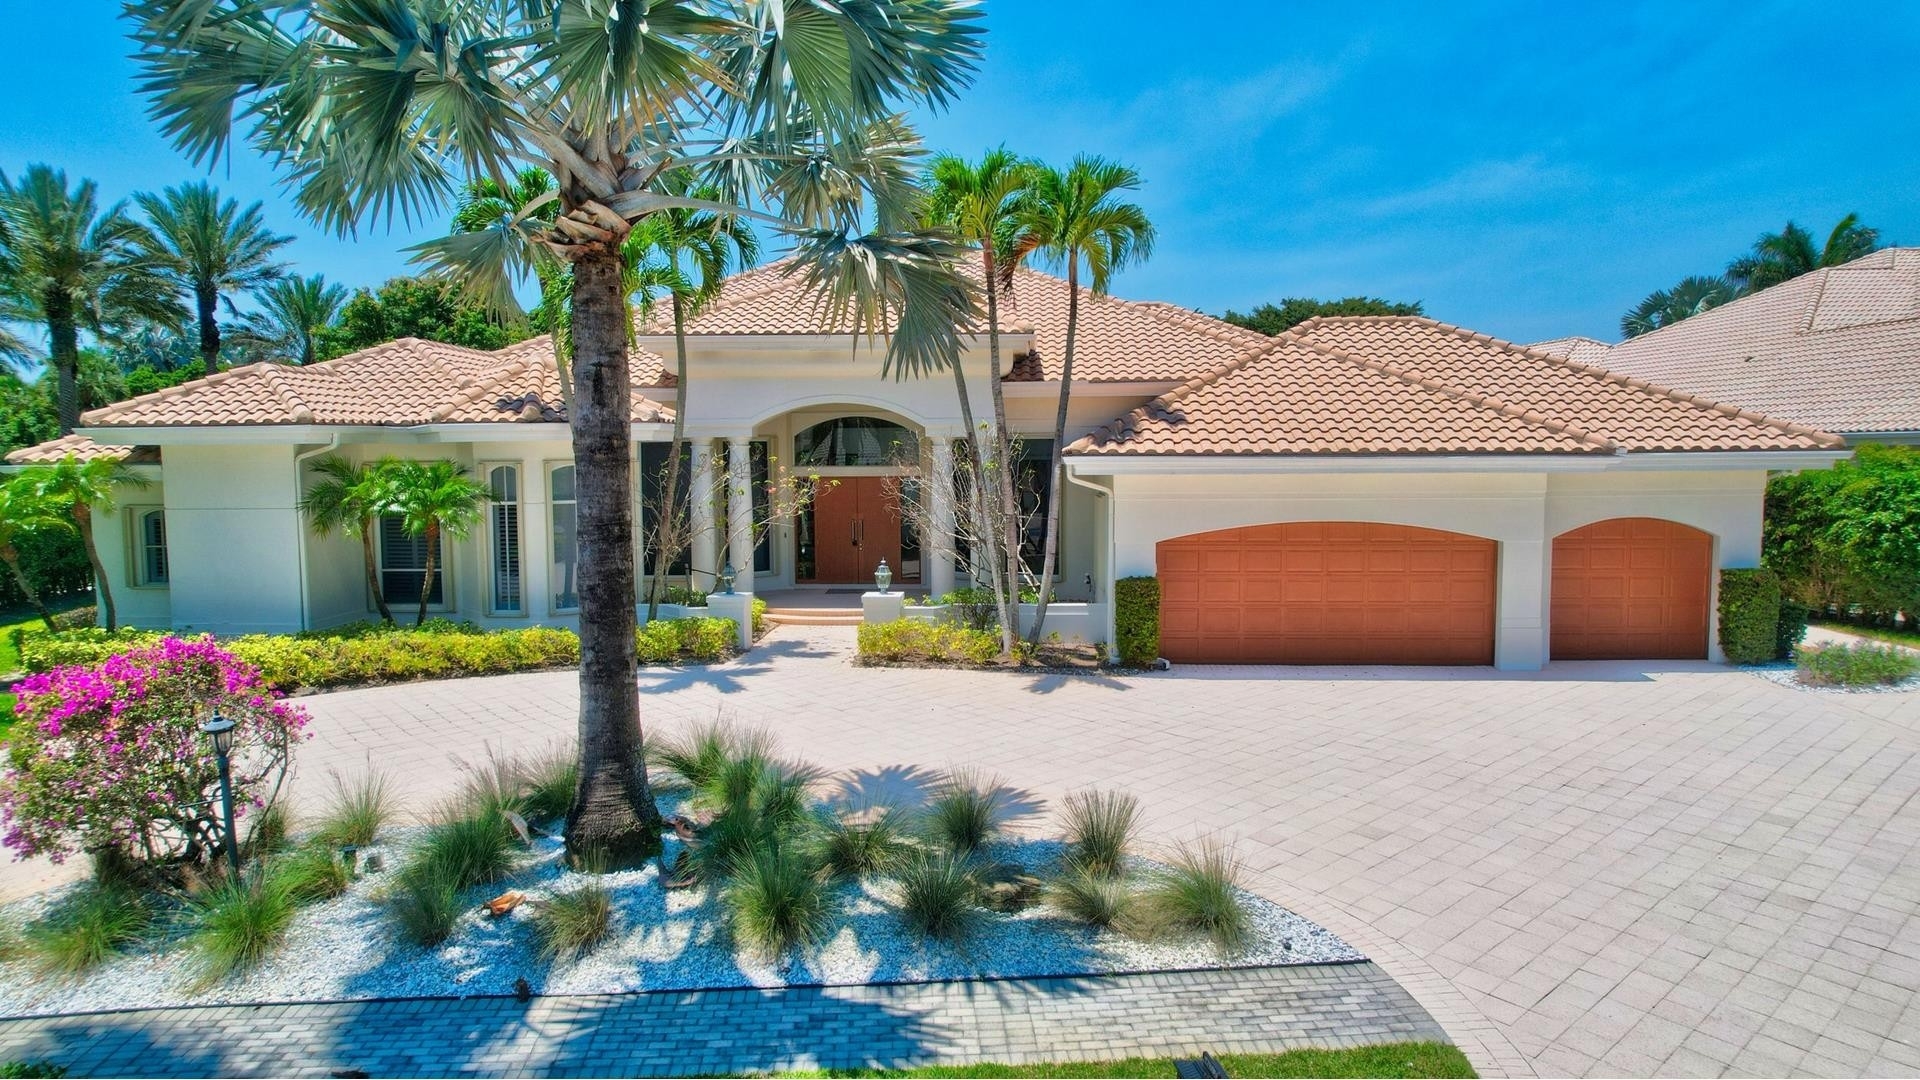 Single Family Home for Sale at Boca Raton, Florida 33496